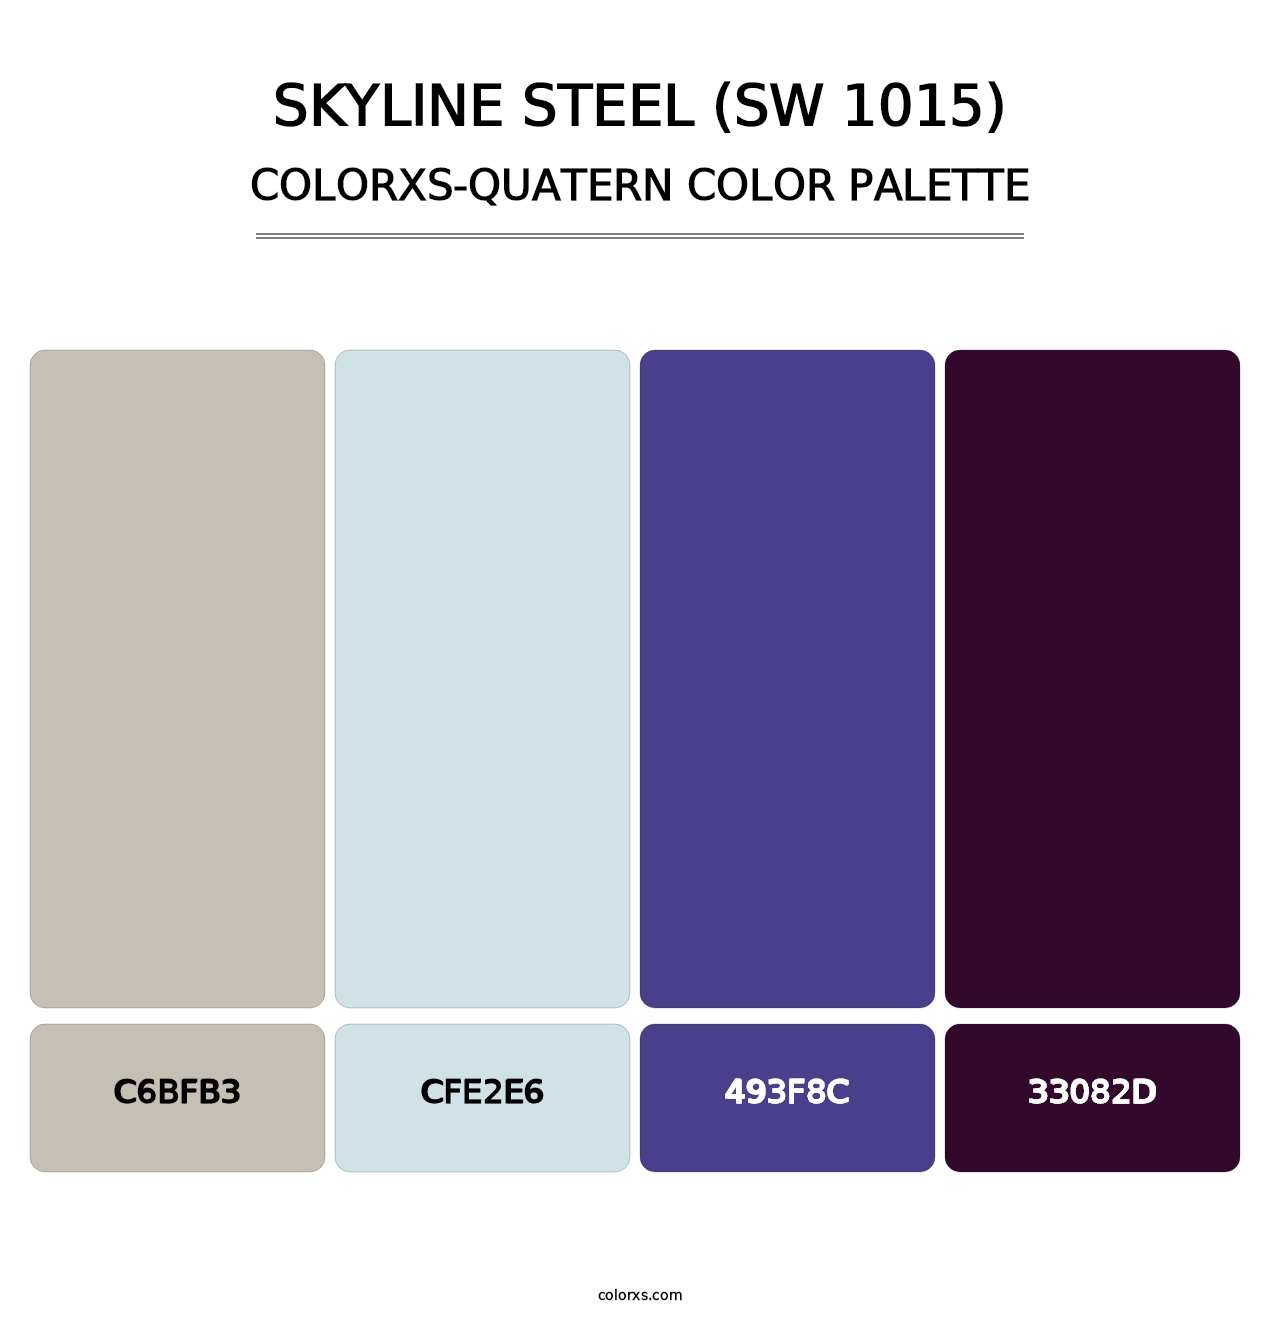 Skyline Steel (SW 1015) - Colorxs Quatern Palette